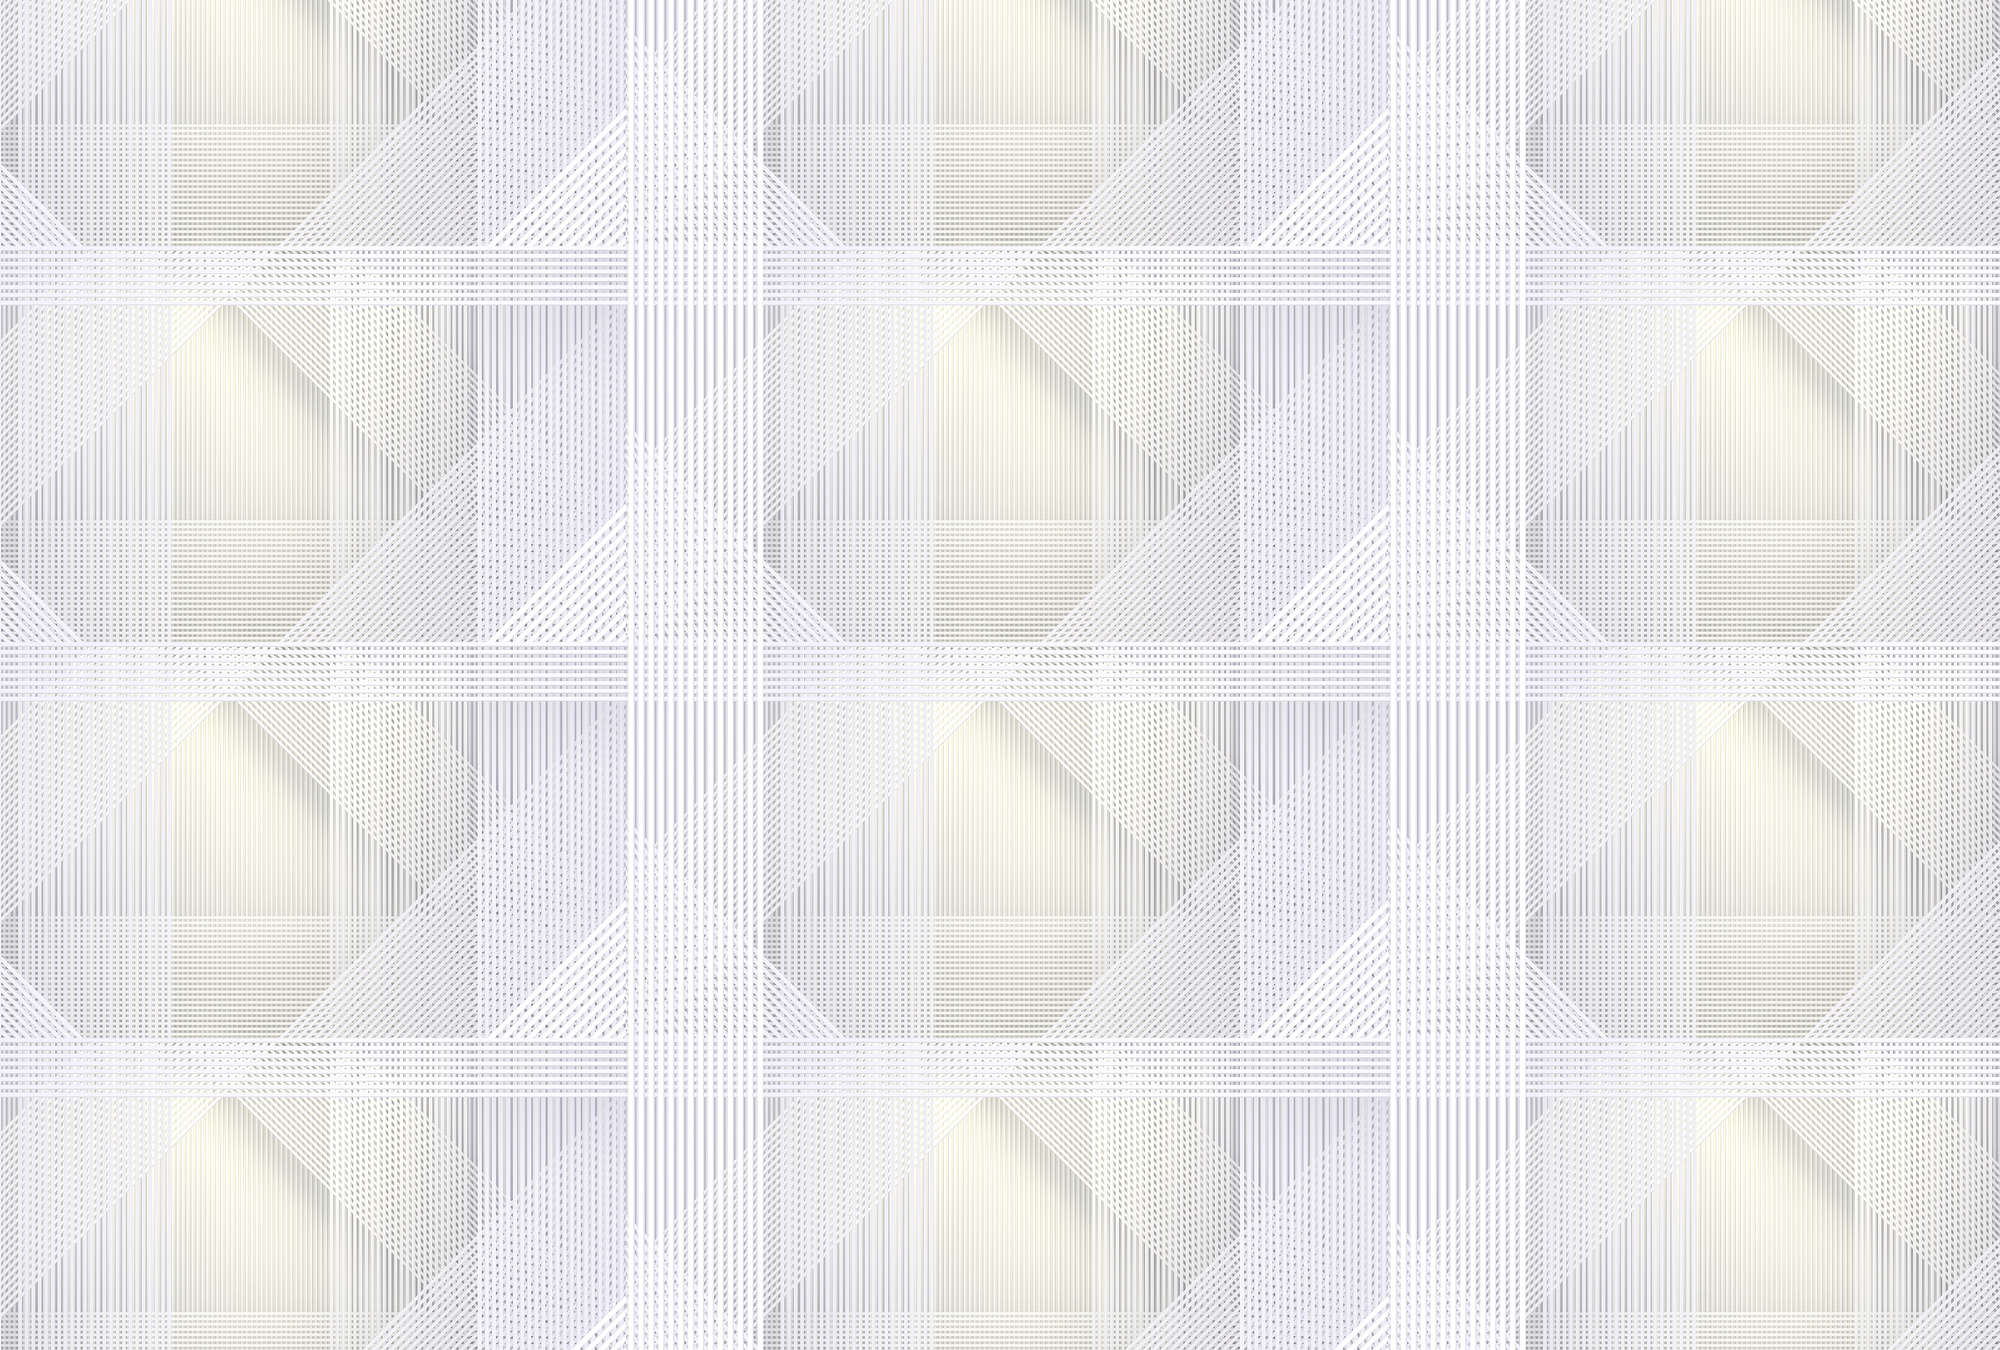             Strings 1 - Photo wallpaper geometric stripe pattern - Yellow, Grey | Matt smooth fleece
        